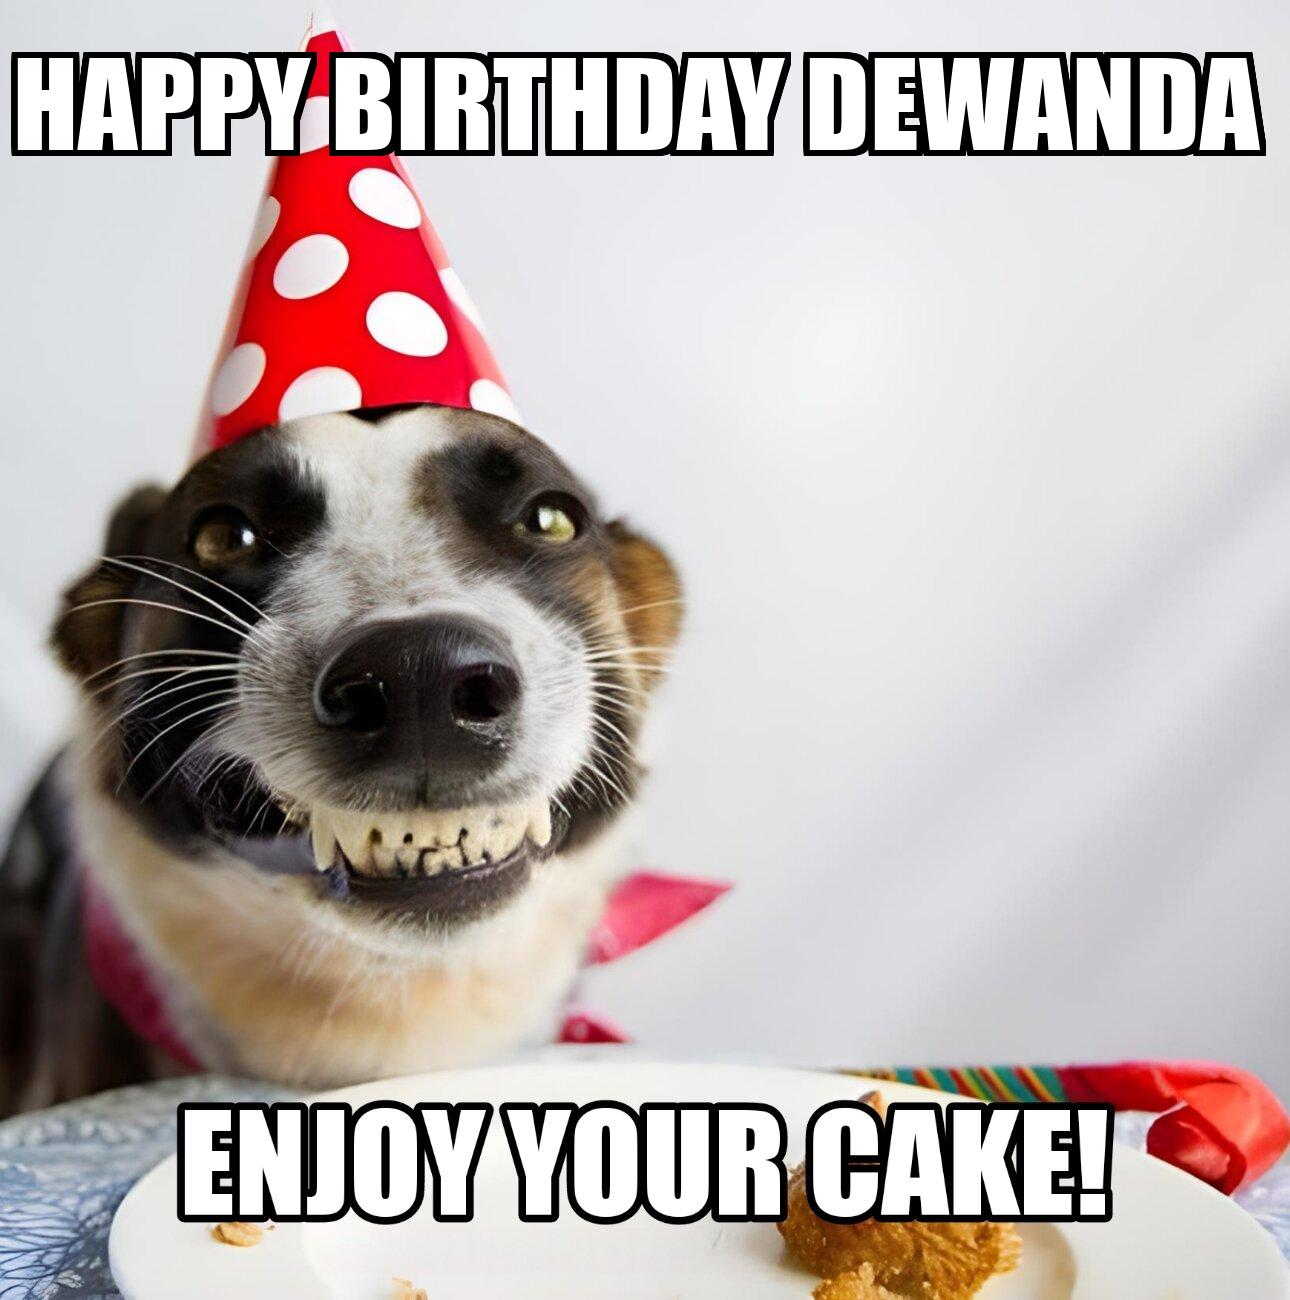 Happy Birthday Dewanda Enjoy Your Cake Dog Meme